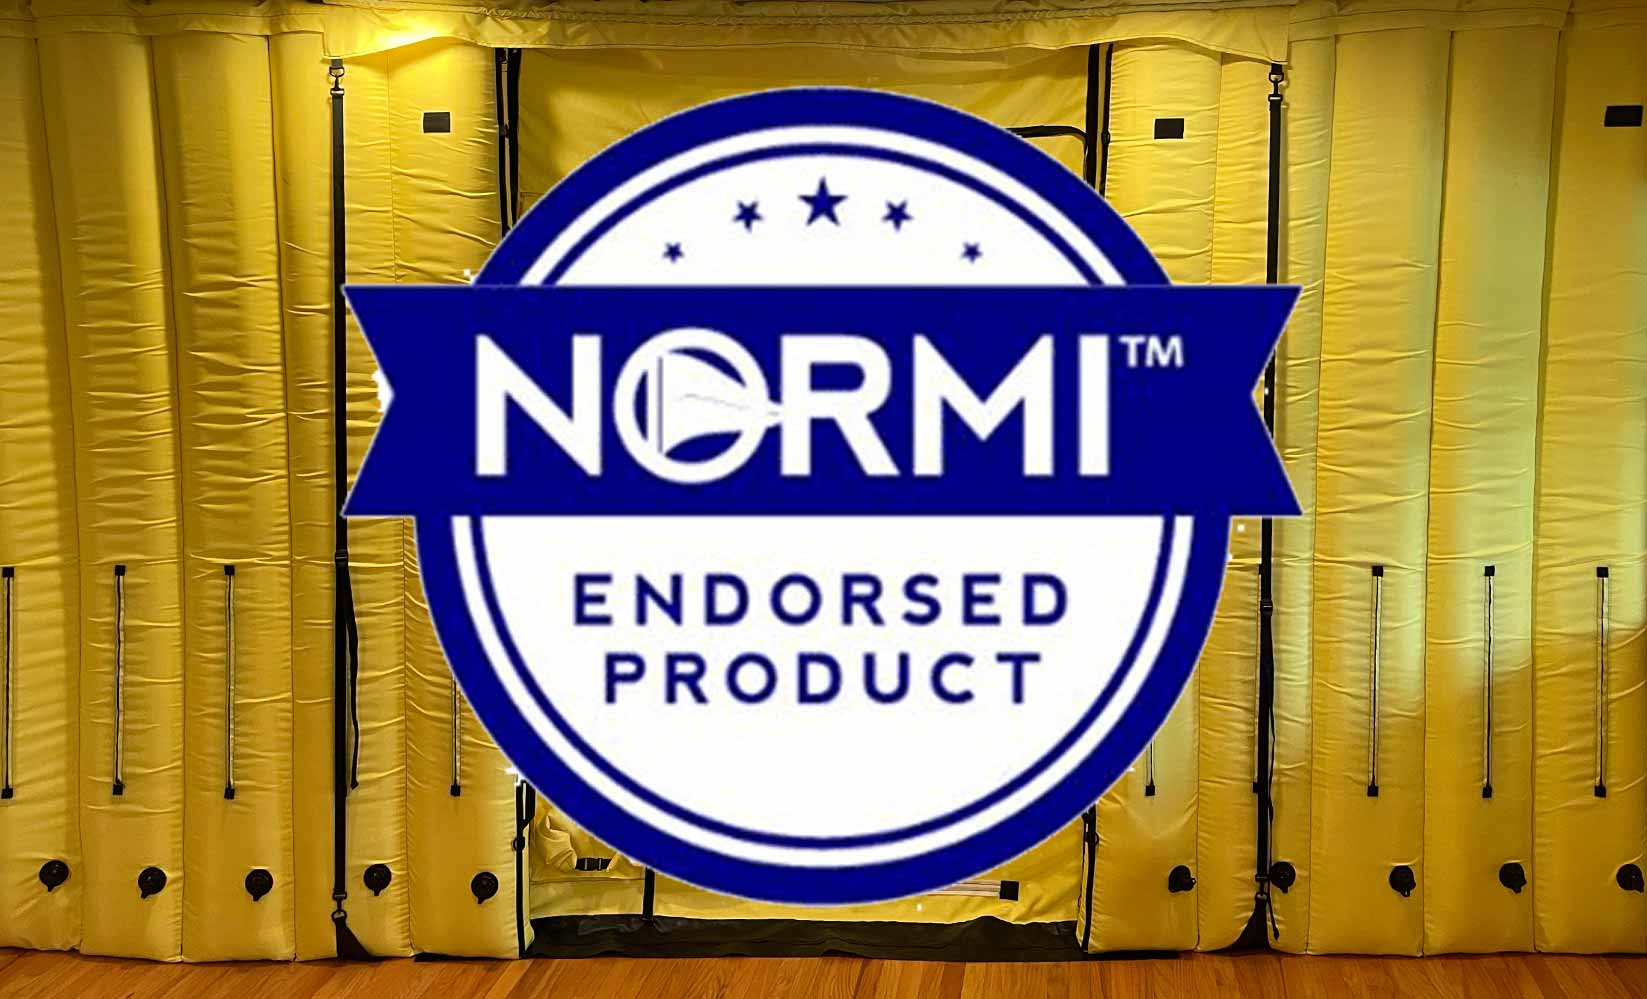 NORMI endorsed product logo